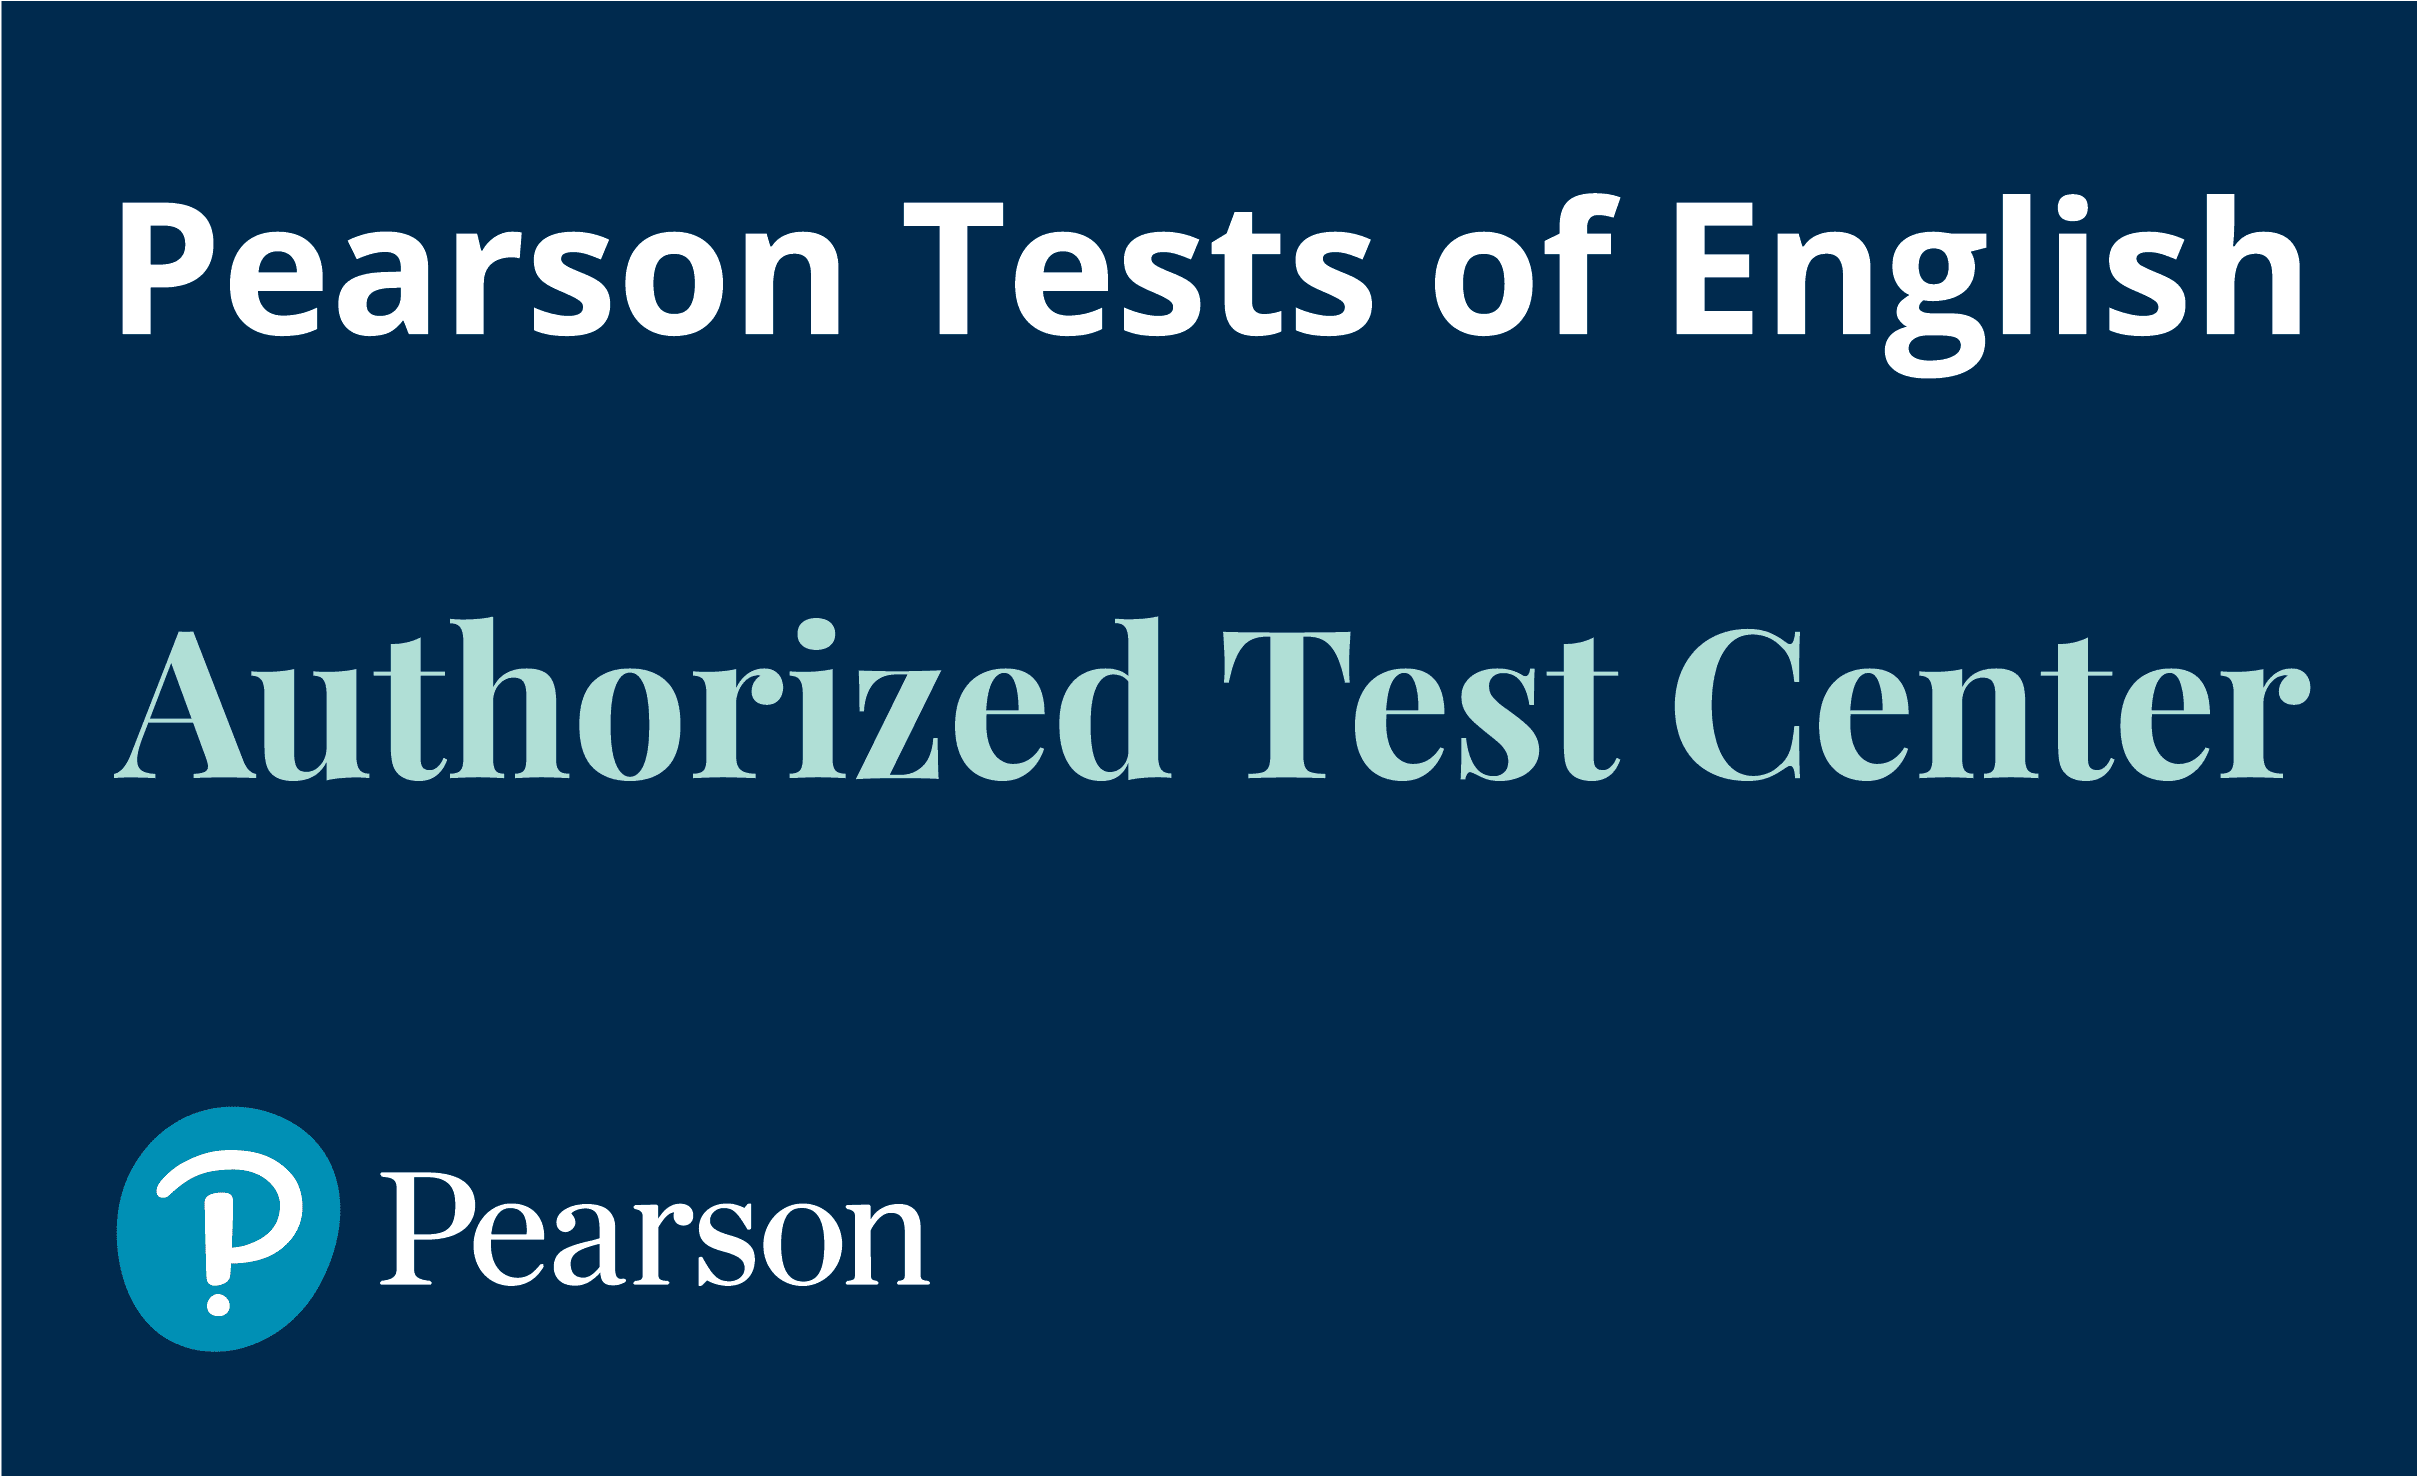 Pearson test center